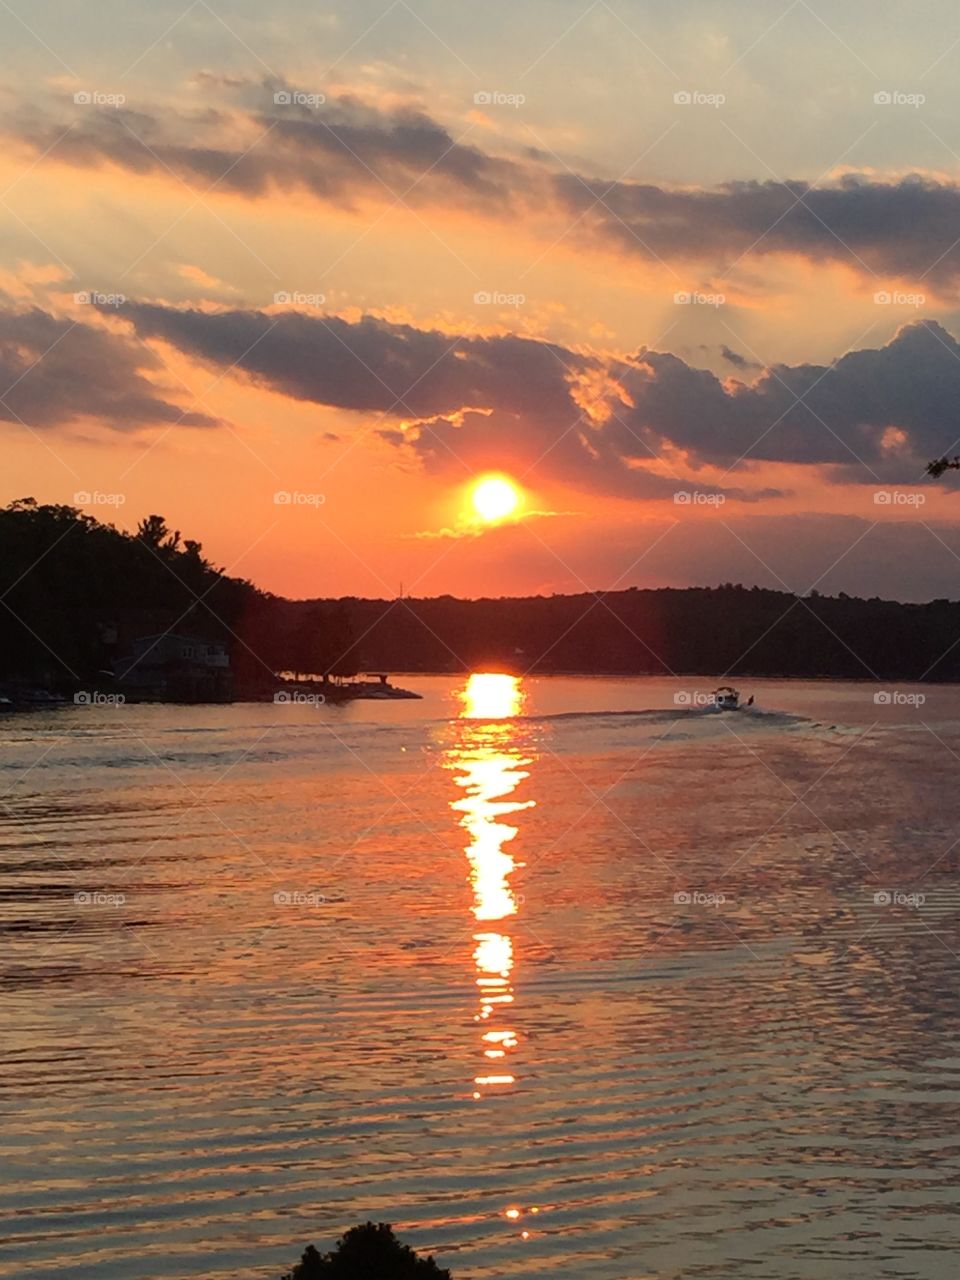 Sunset and wake boarding on Lake Harmony, Pennsylvania. 